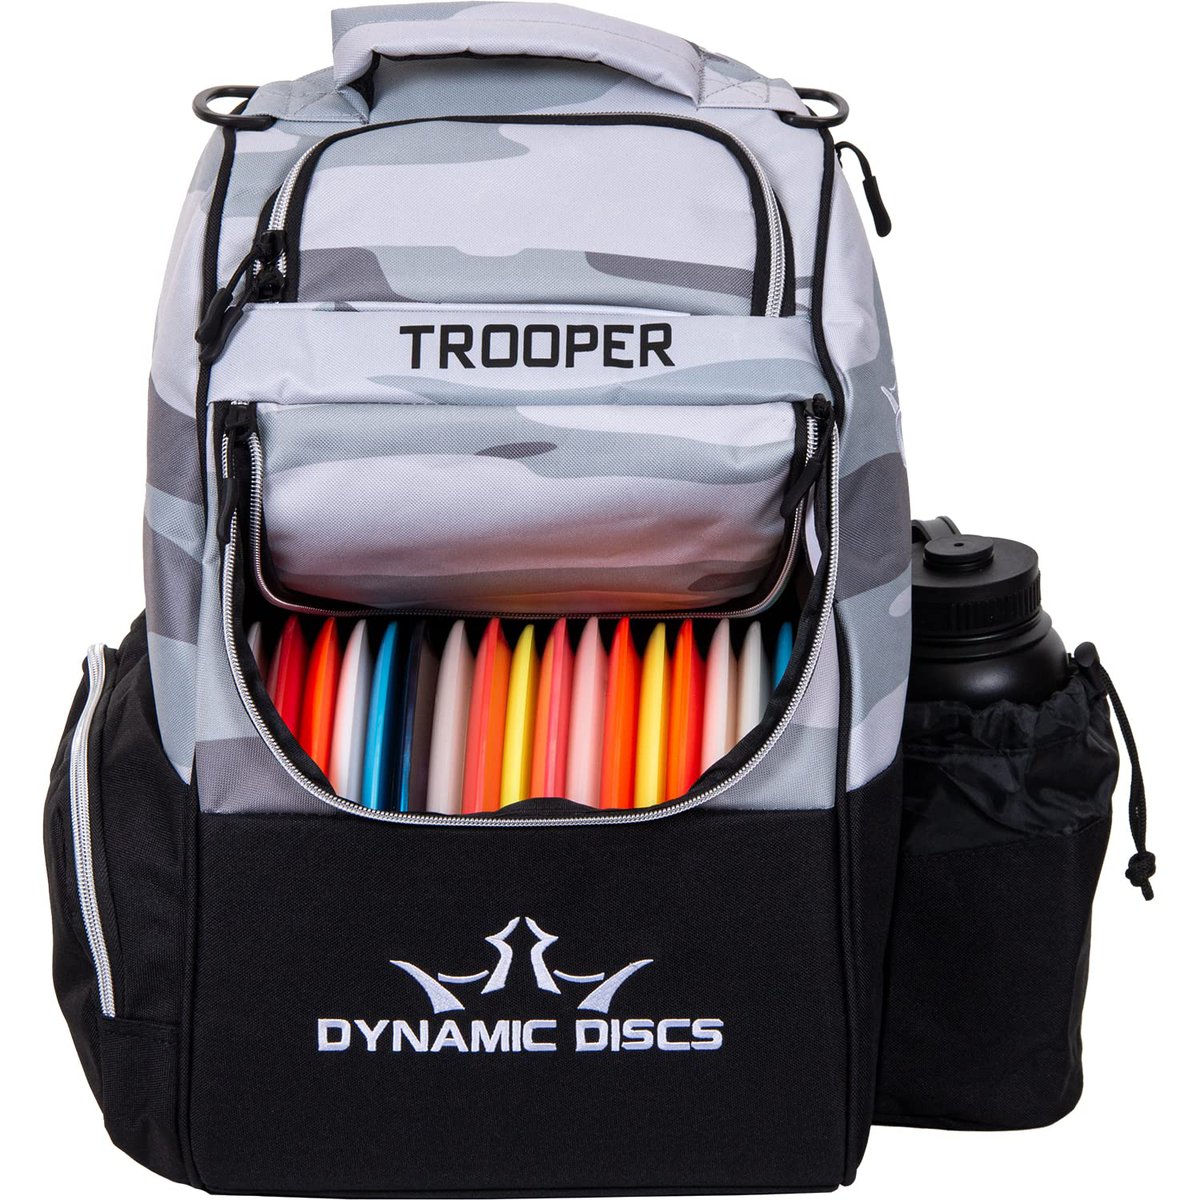 Dynamic Discs Trooper Disc Golf Backpack, Best Disc Golf Bags